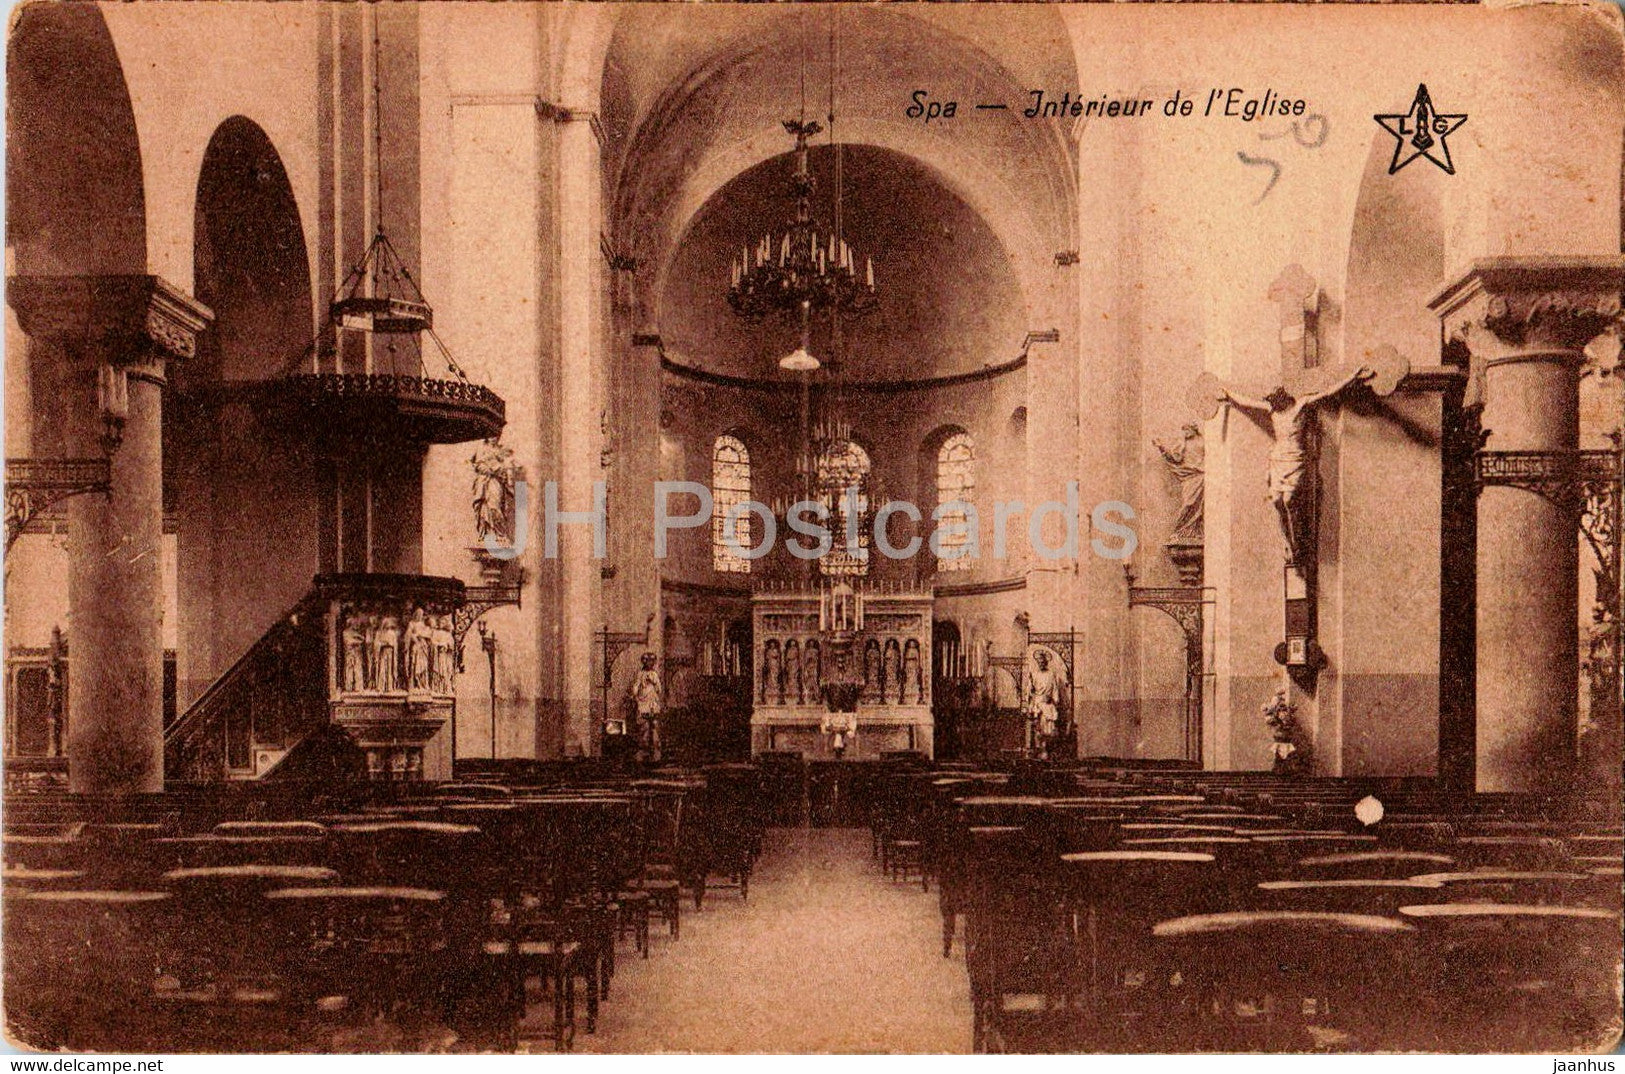 Spa - Interieur de l'Eglise - church - old postcard - Belgium - unused - JH Postcards